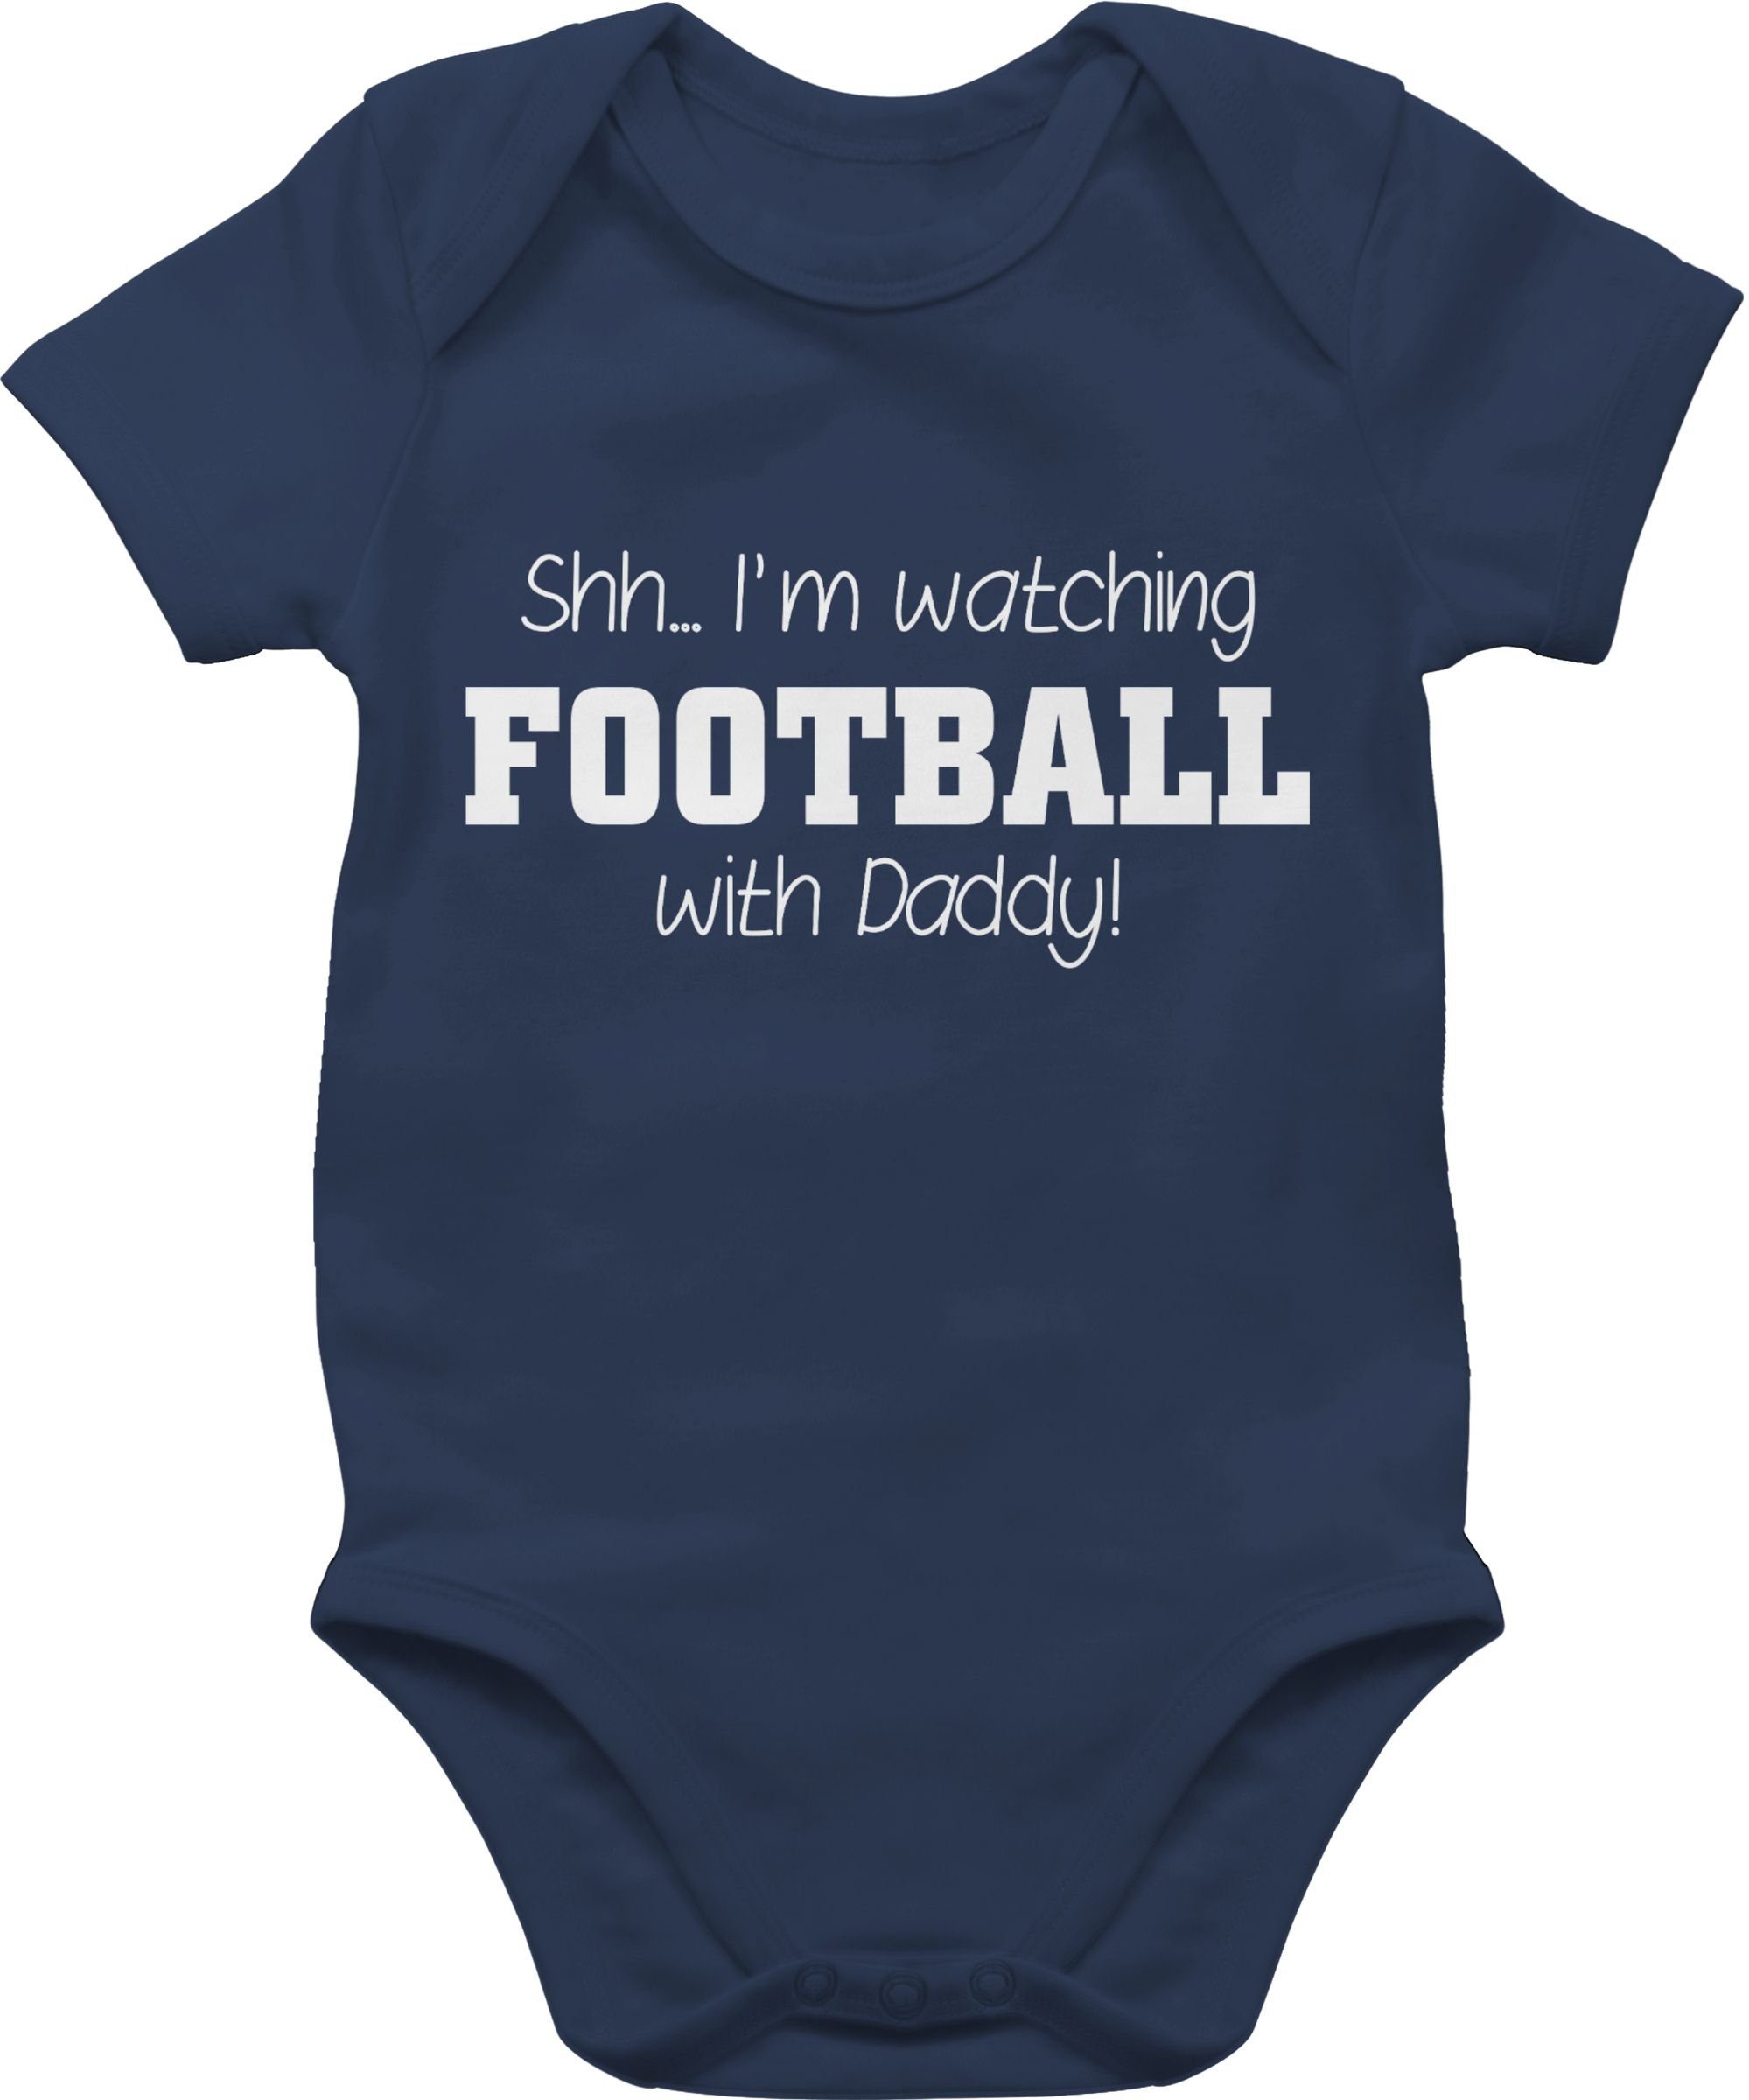 Shirtracer Shirtbody Shh...I'm watching football with Daddy! - weiß Sport & Bewegung Baby 2 Navy Blau